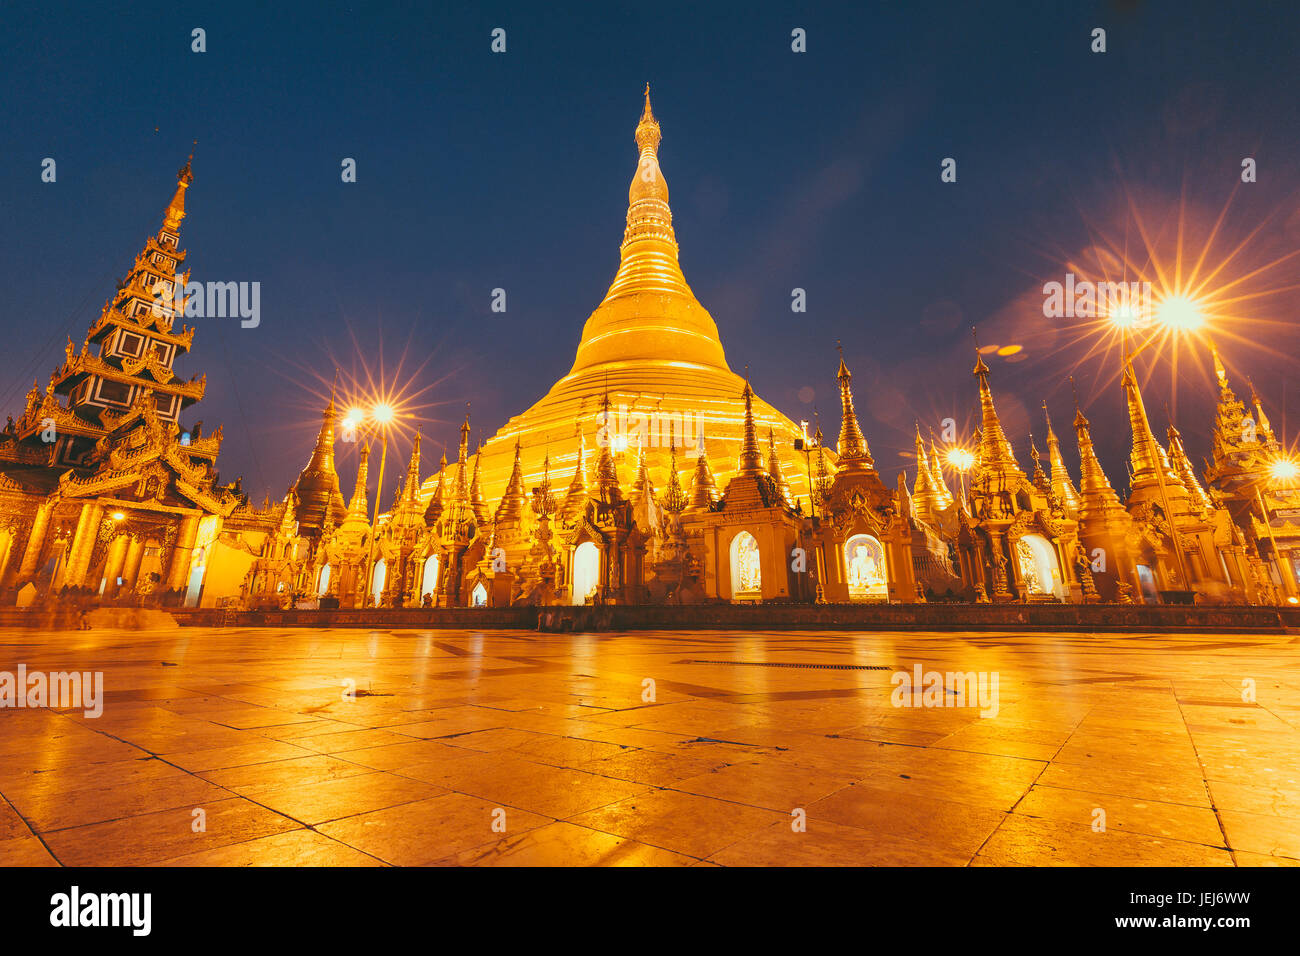 Die Shwedagon-Pagode - vergoldeten Shwedagon Zedi Daw - große Dagon Pagode - Goldene Pagode Stupa Yangon Myanmar Stockfoto